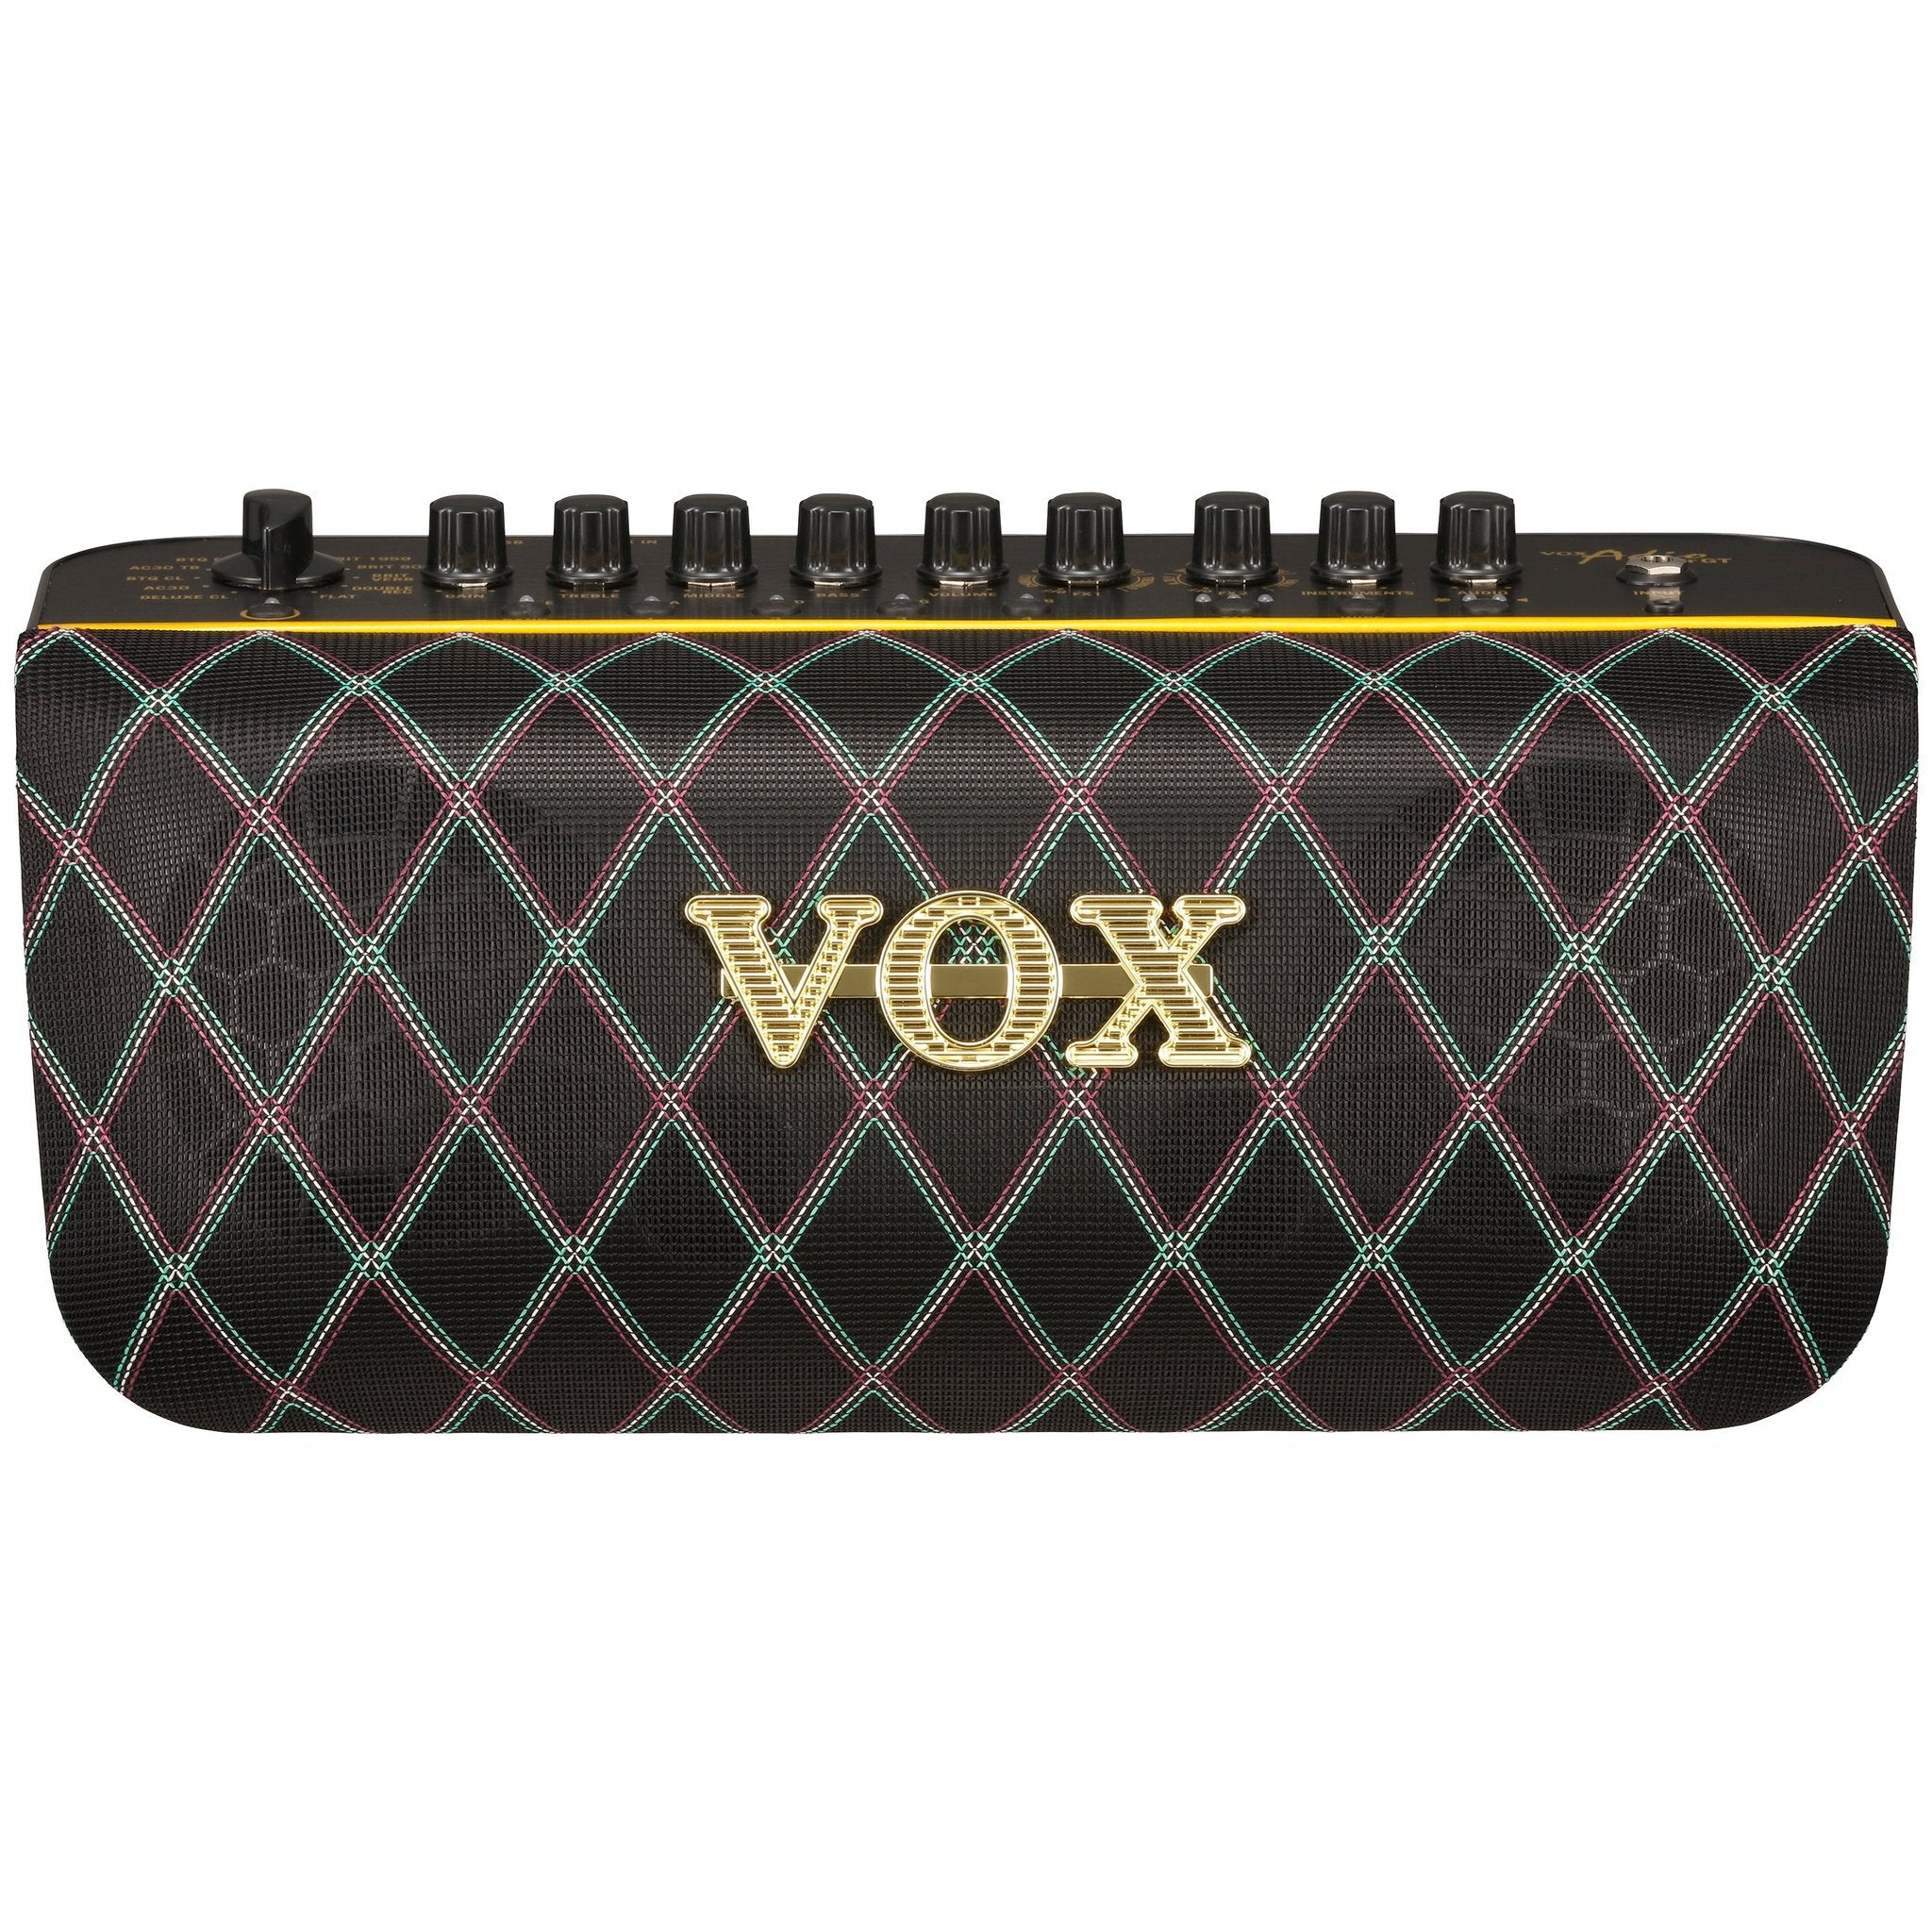 Vox Adio Air Guitar Amp w/Bluetooth 1